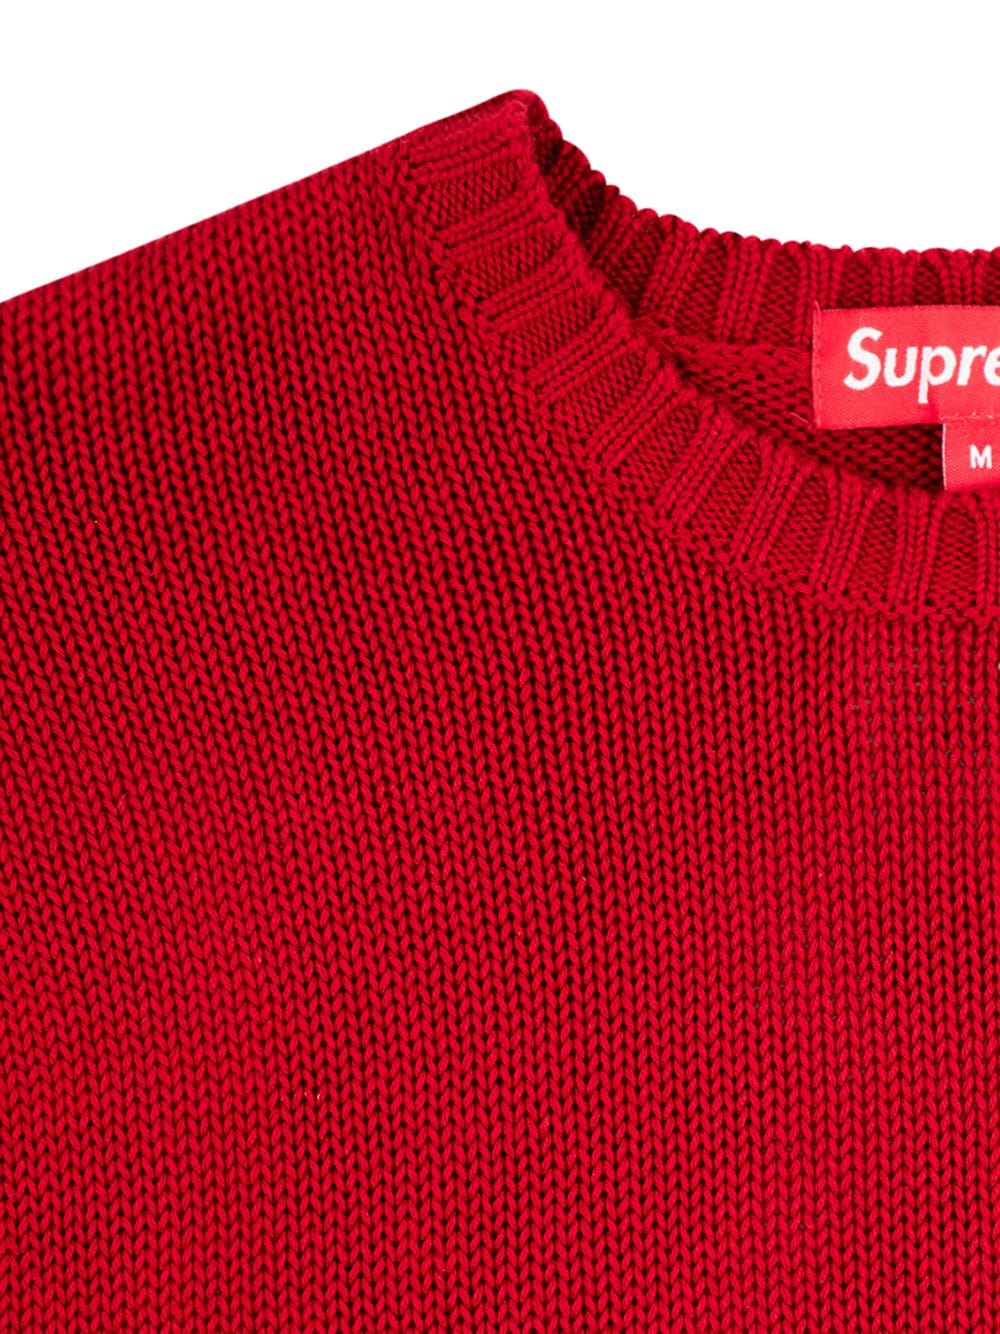 Supreme Back Logo Knitted Jumper - Farfetch